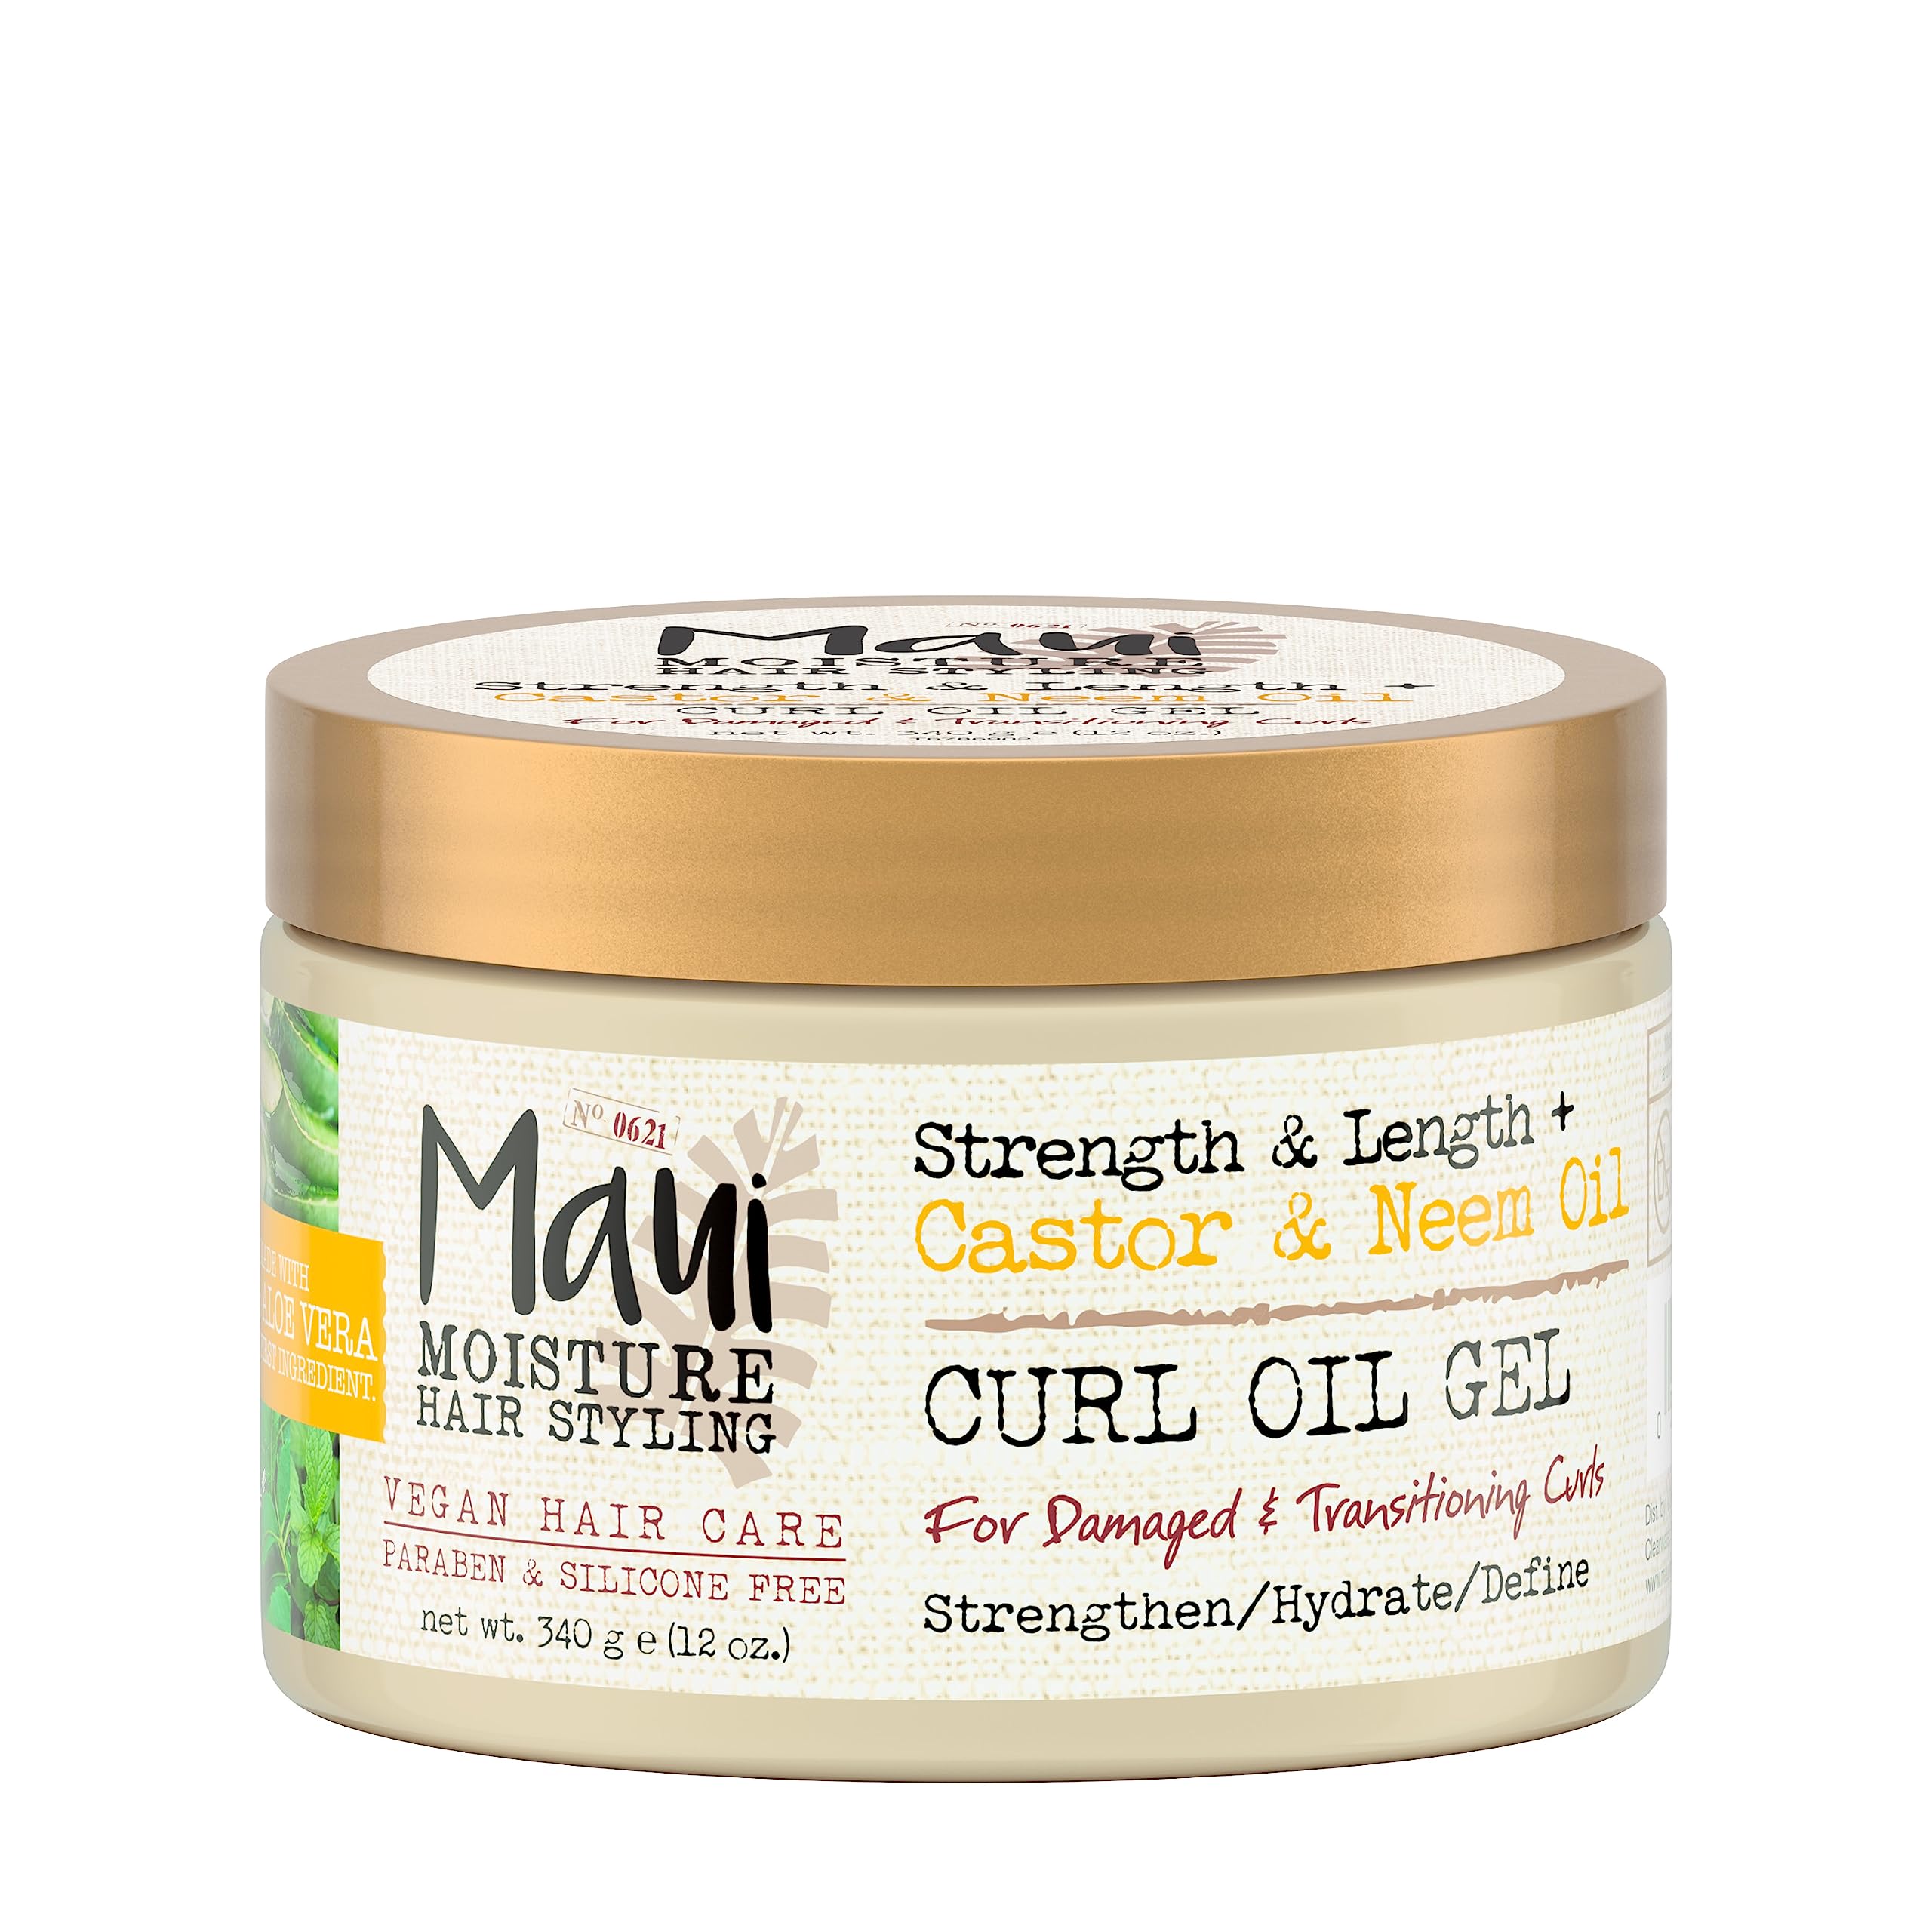 Maui Moisture Strength & Length + Castor & Neem Oil Curl Oil Gel, Natural Curl Hair Product, 12 Oz